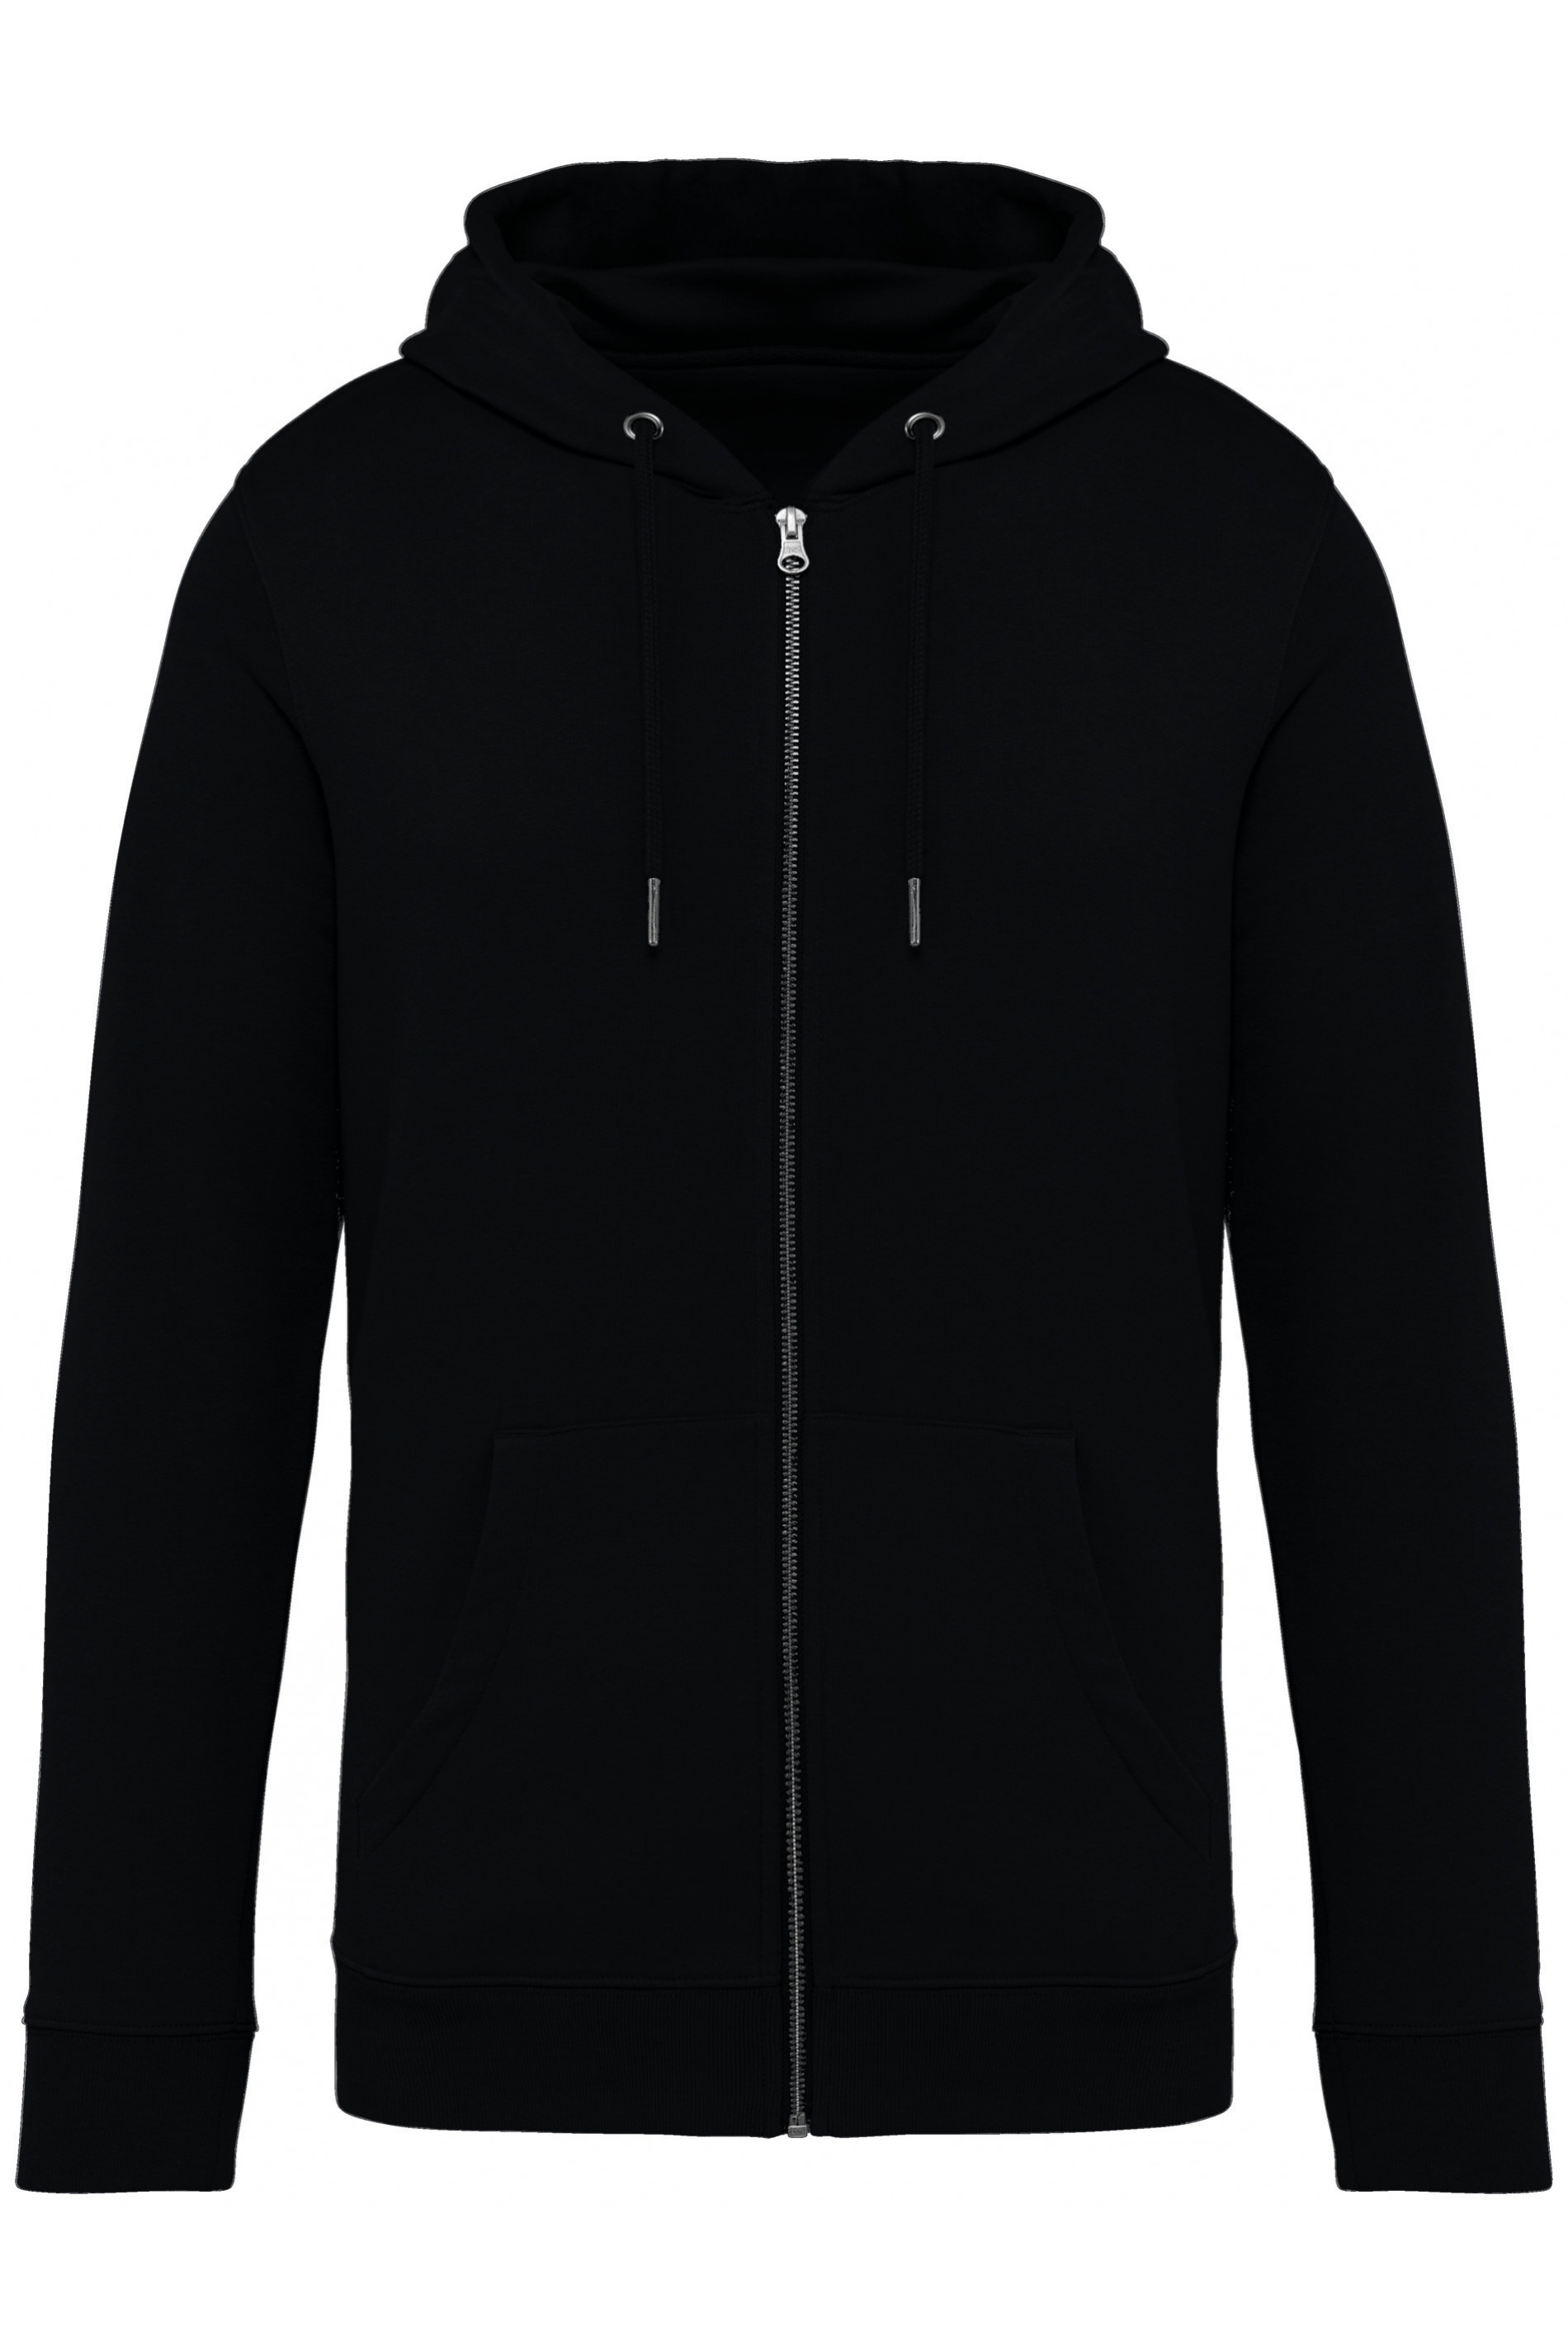 Unisex organic cotton hooded jacket 350 g/m² cotton ART® Black XS